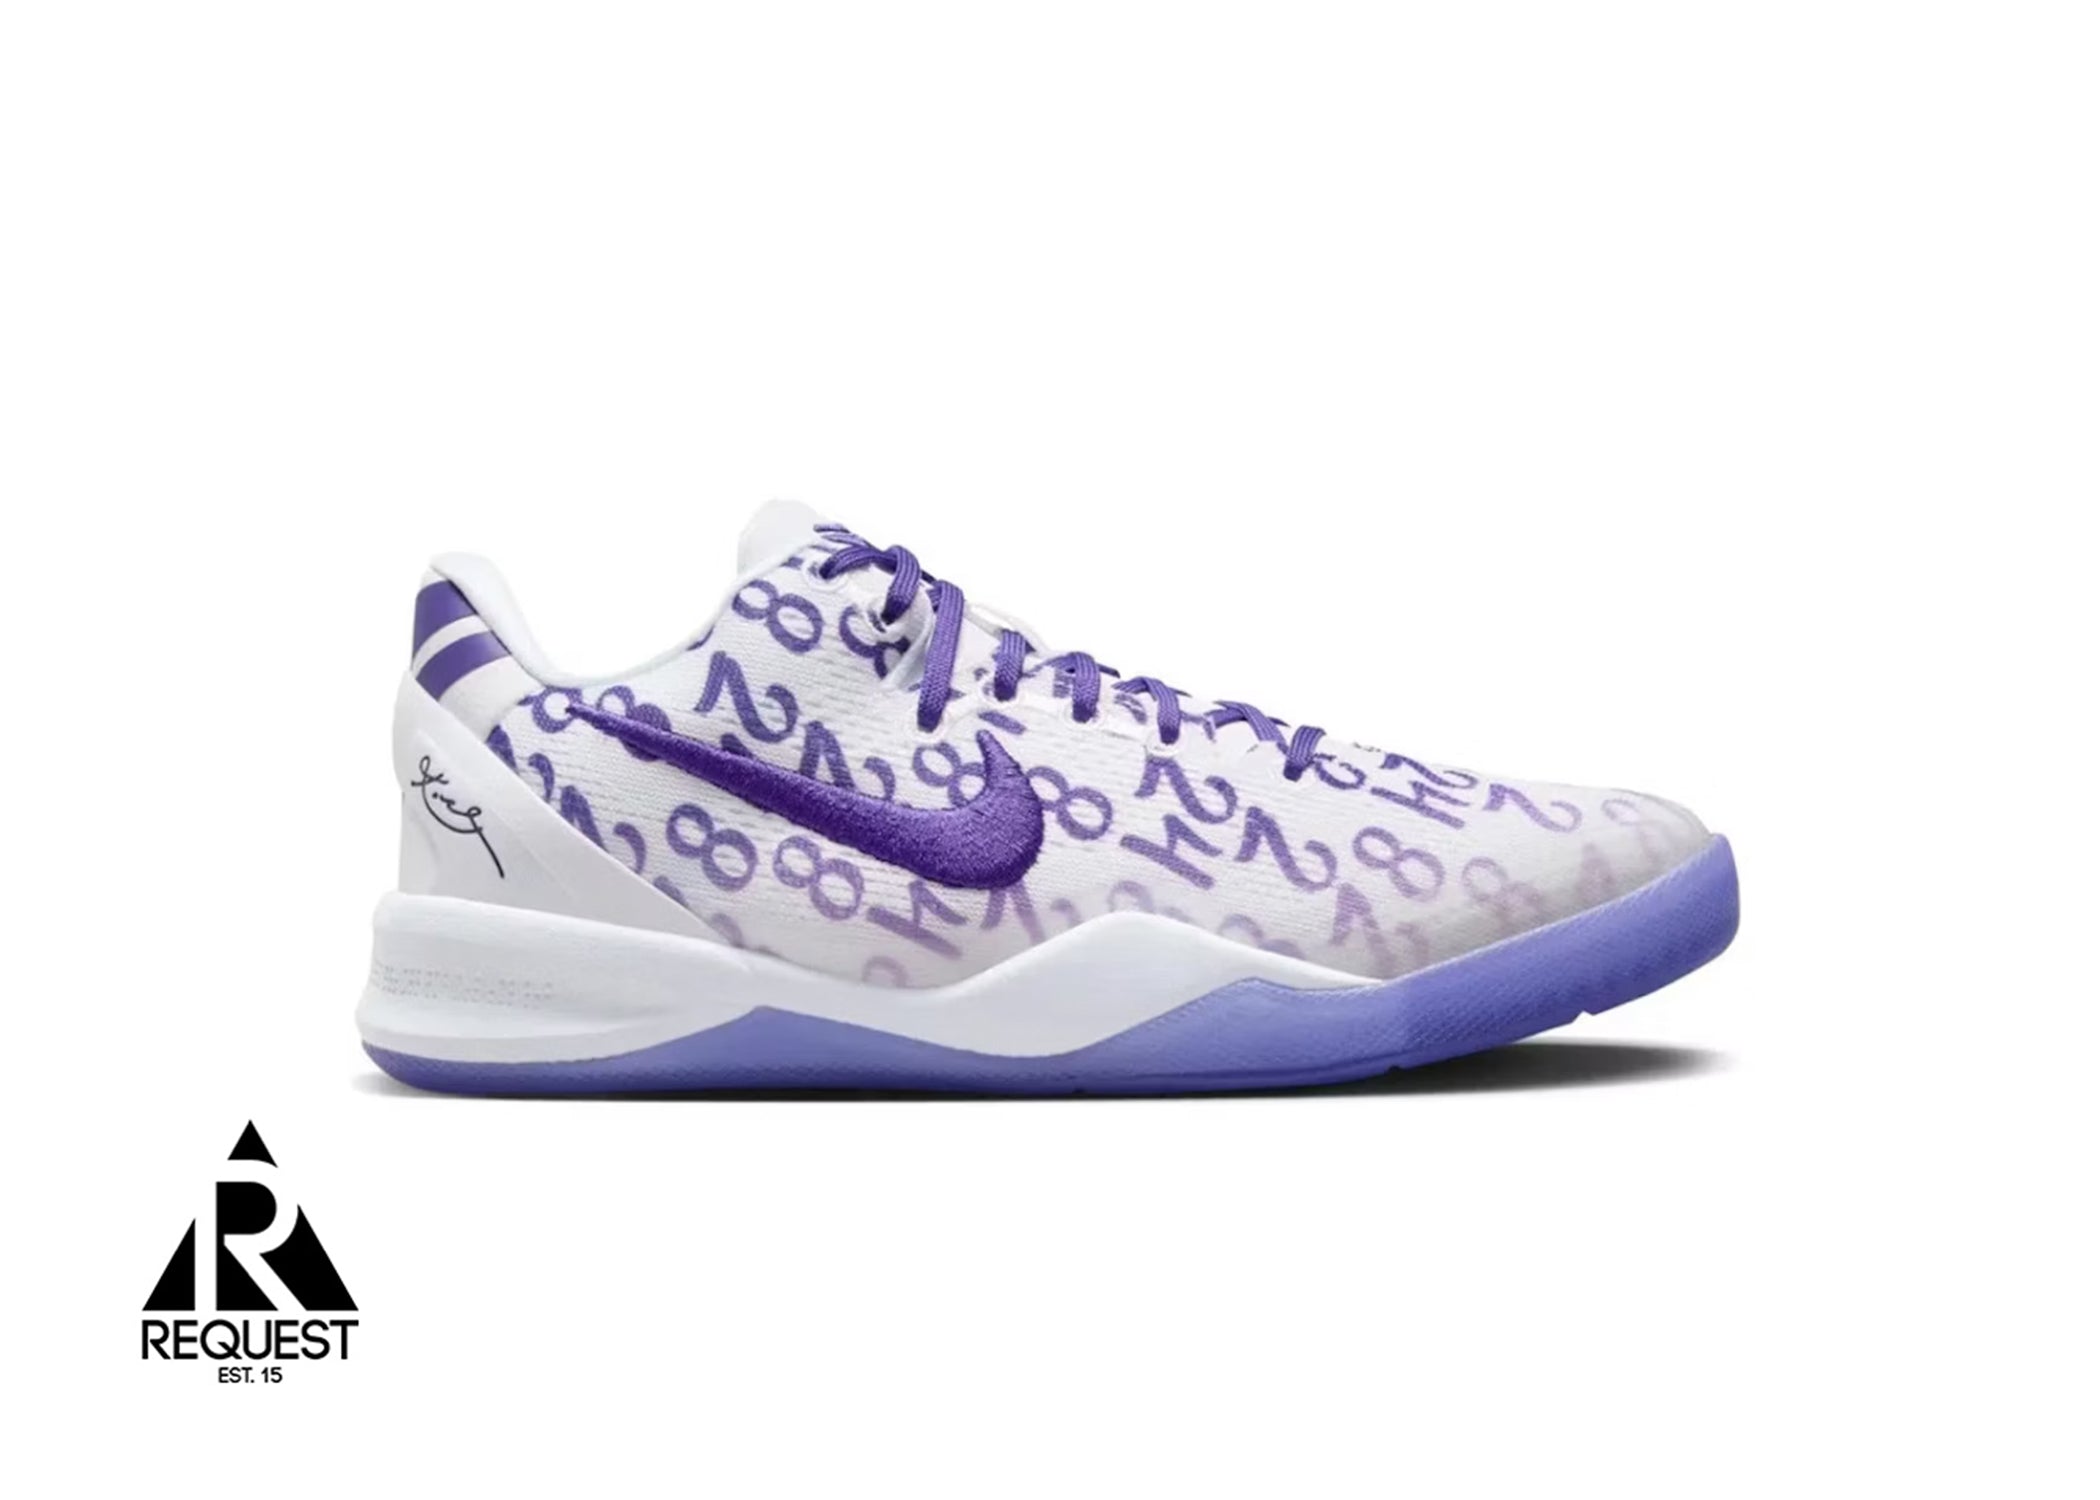 Nike Kobe 8 Protro "Court Purple" (GS)